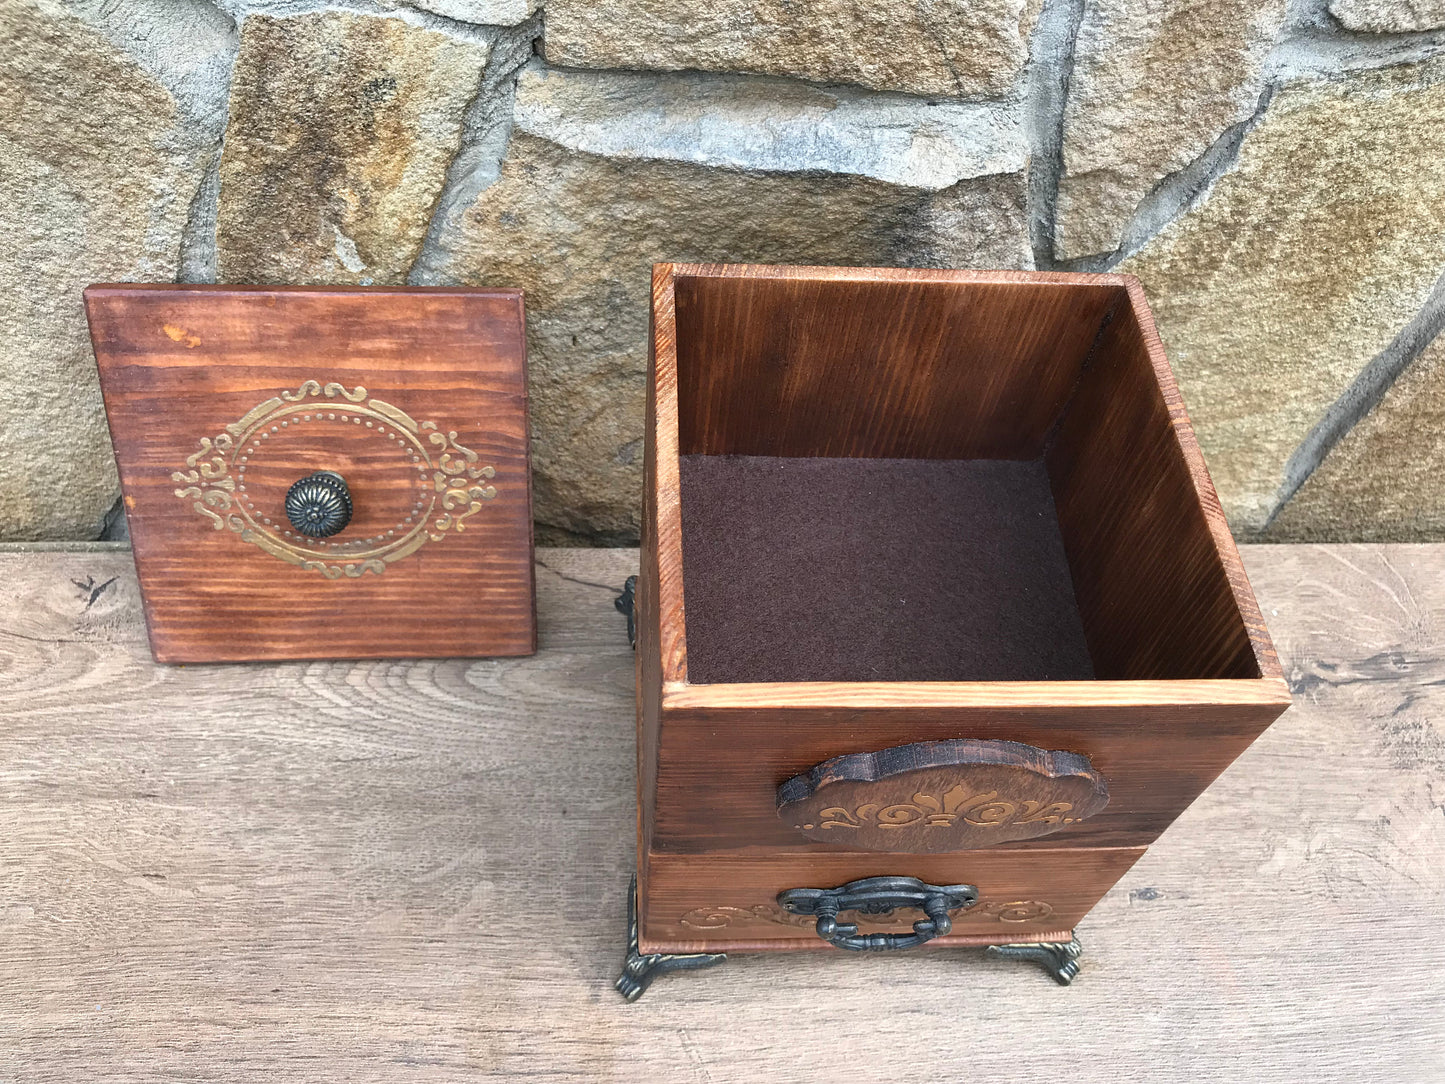 Wooden gift, jewelry box, jewelry storage, jewelry casket, vintage casket, wooden casket,wooden anniversary,5th anniversary,chest of drawers